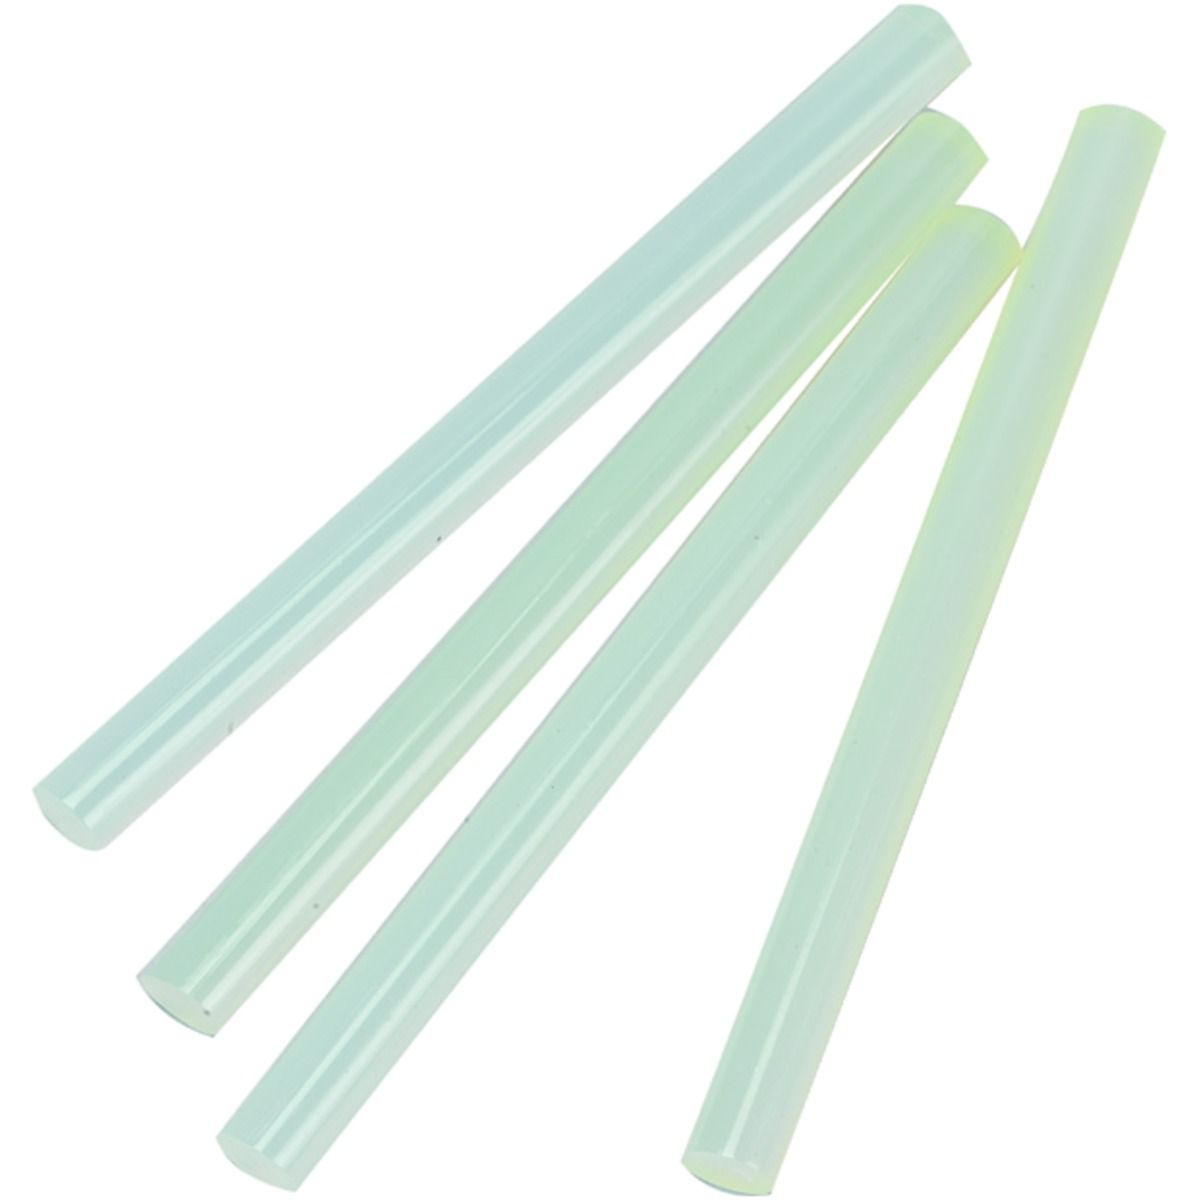 Image of Wickes Hot Melt Glue Sticks - Pack of 12